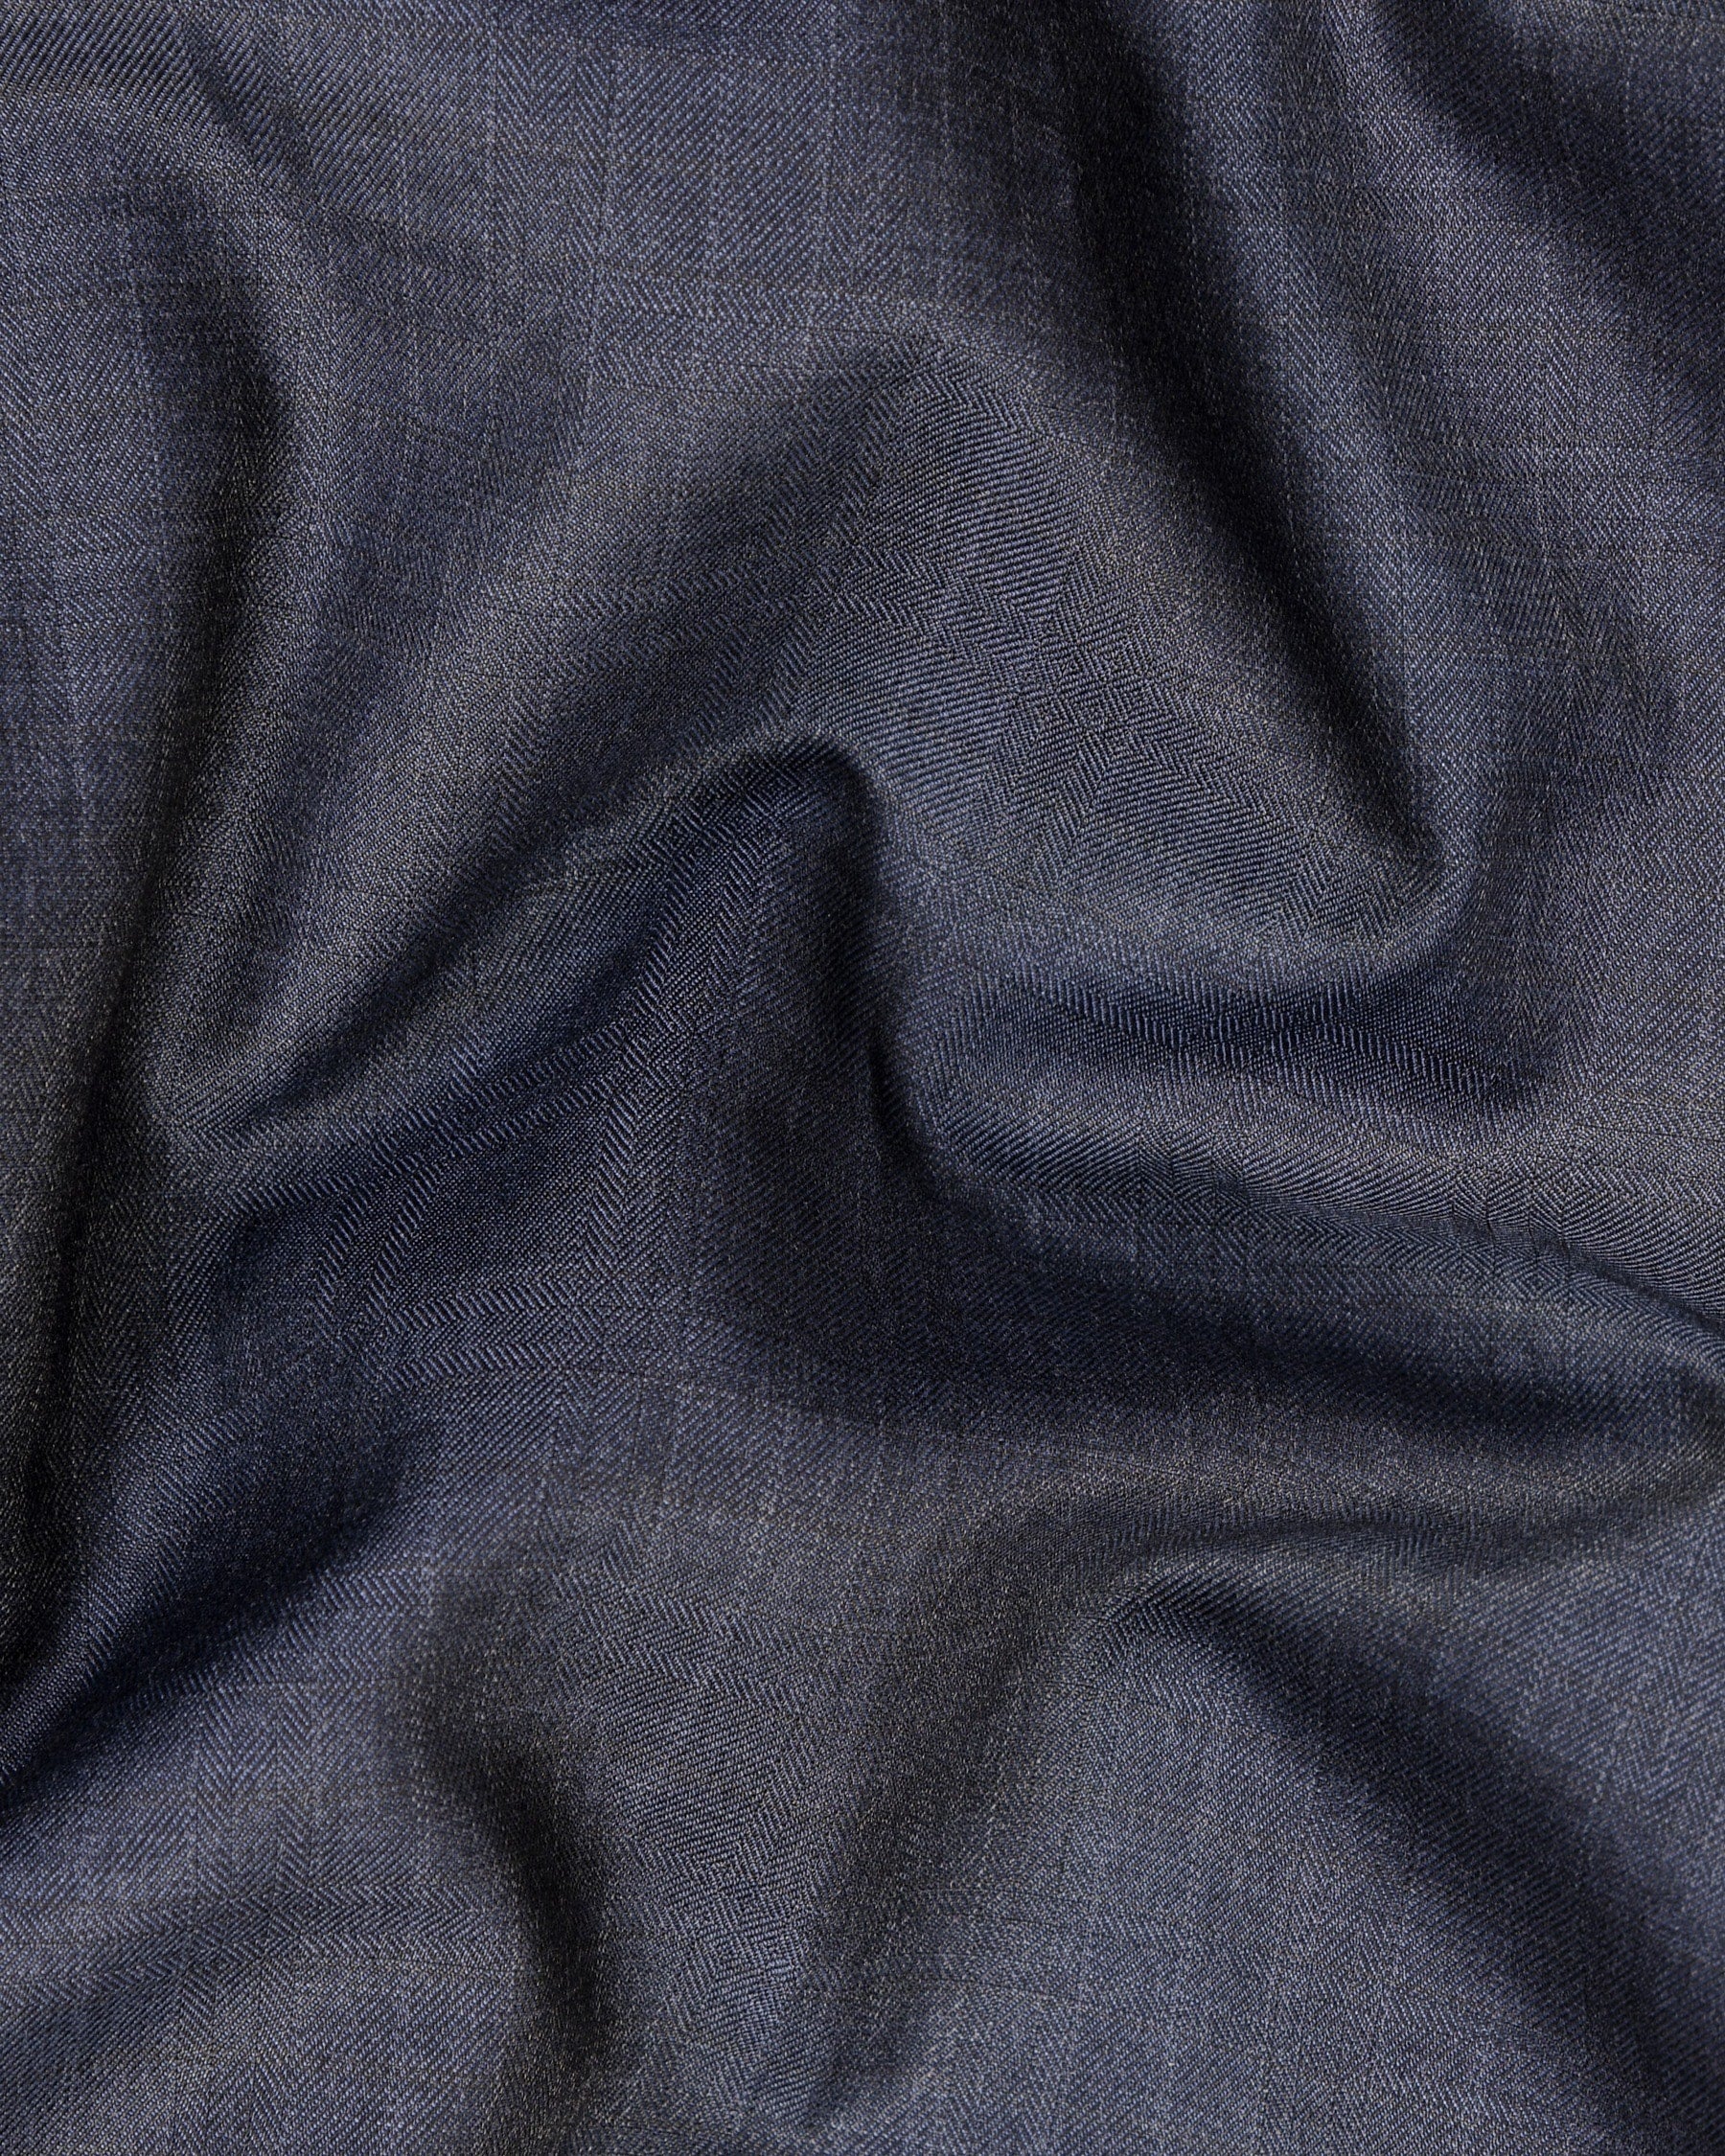 Ship Gray with Blue Tonal Subtle Checked Waistcoat